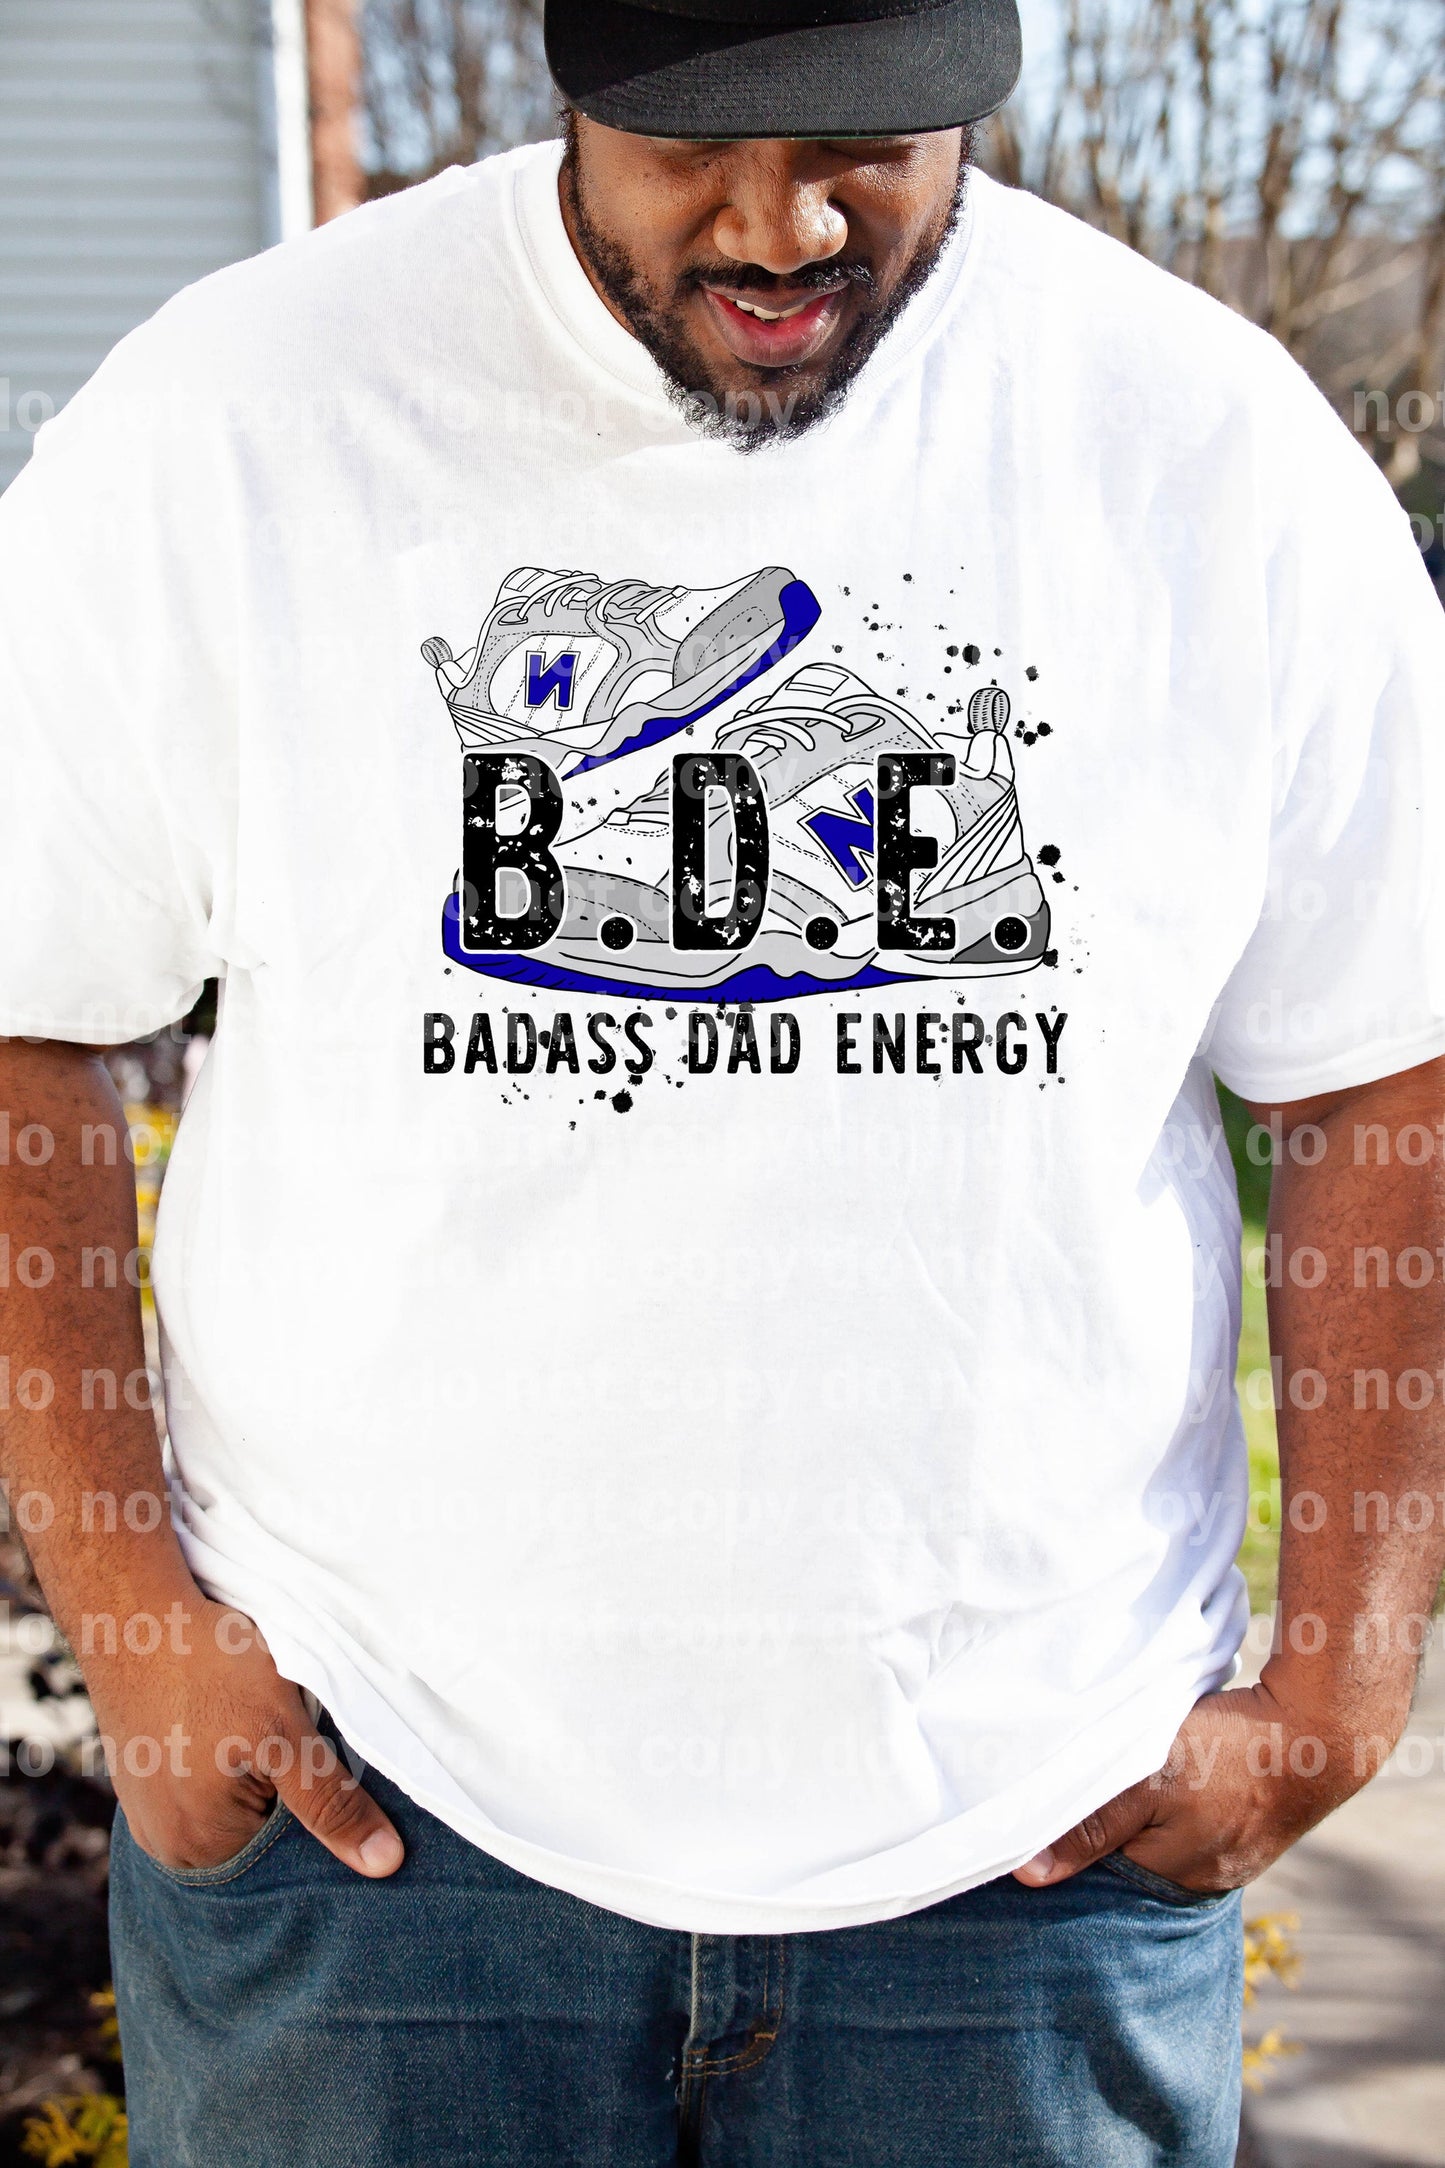 B.D.E Badass Dad Energy Dream Print or Sublimation Print